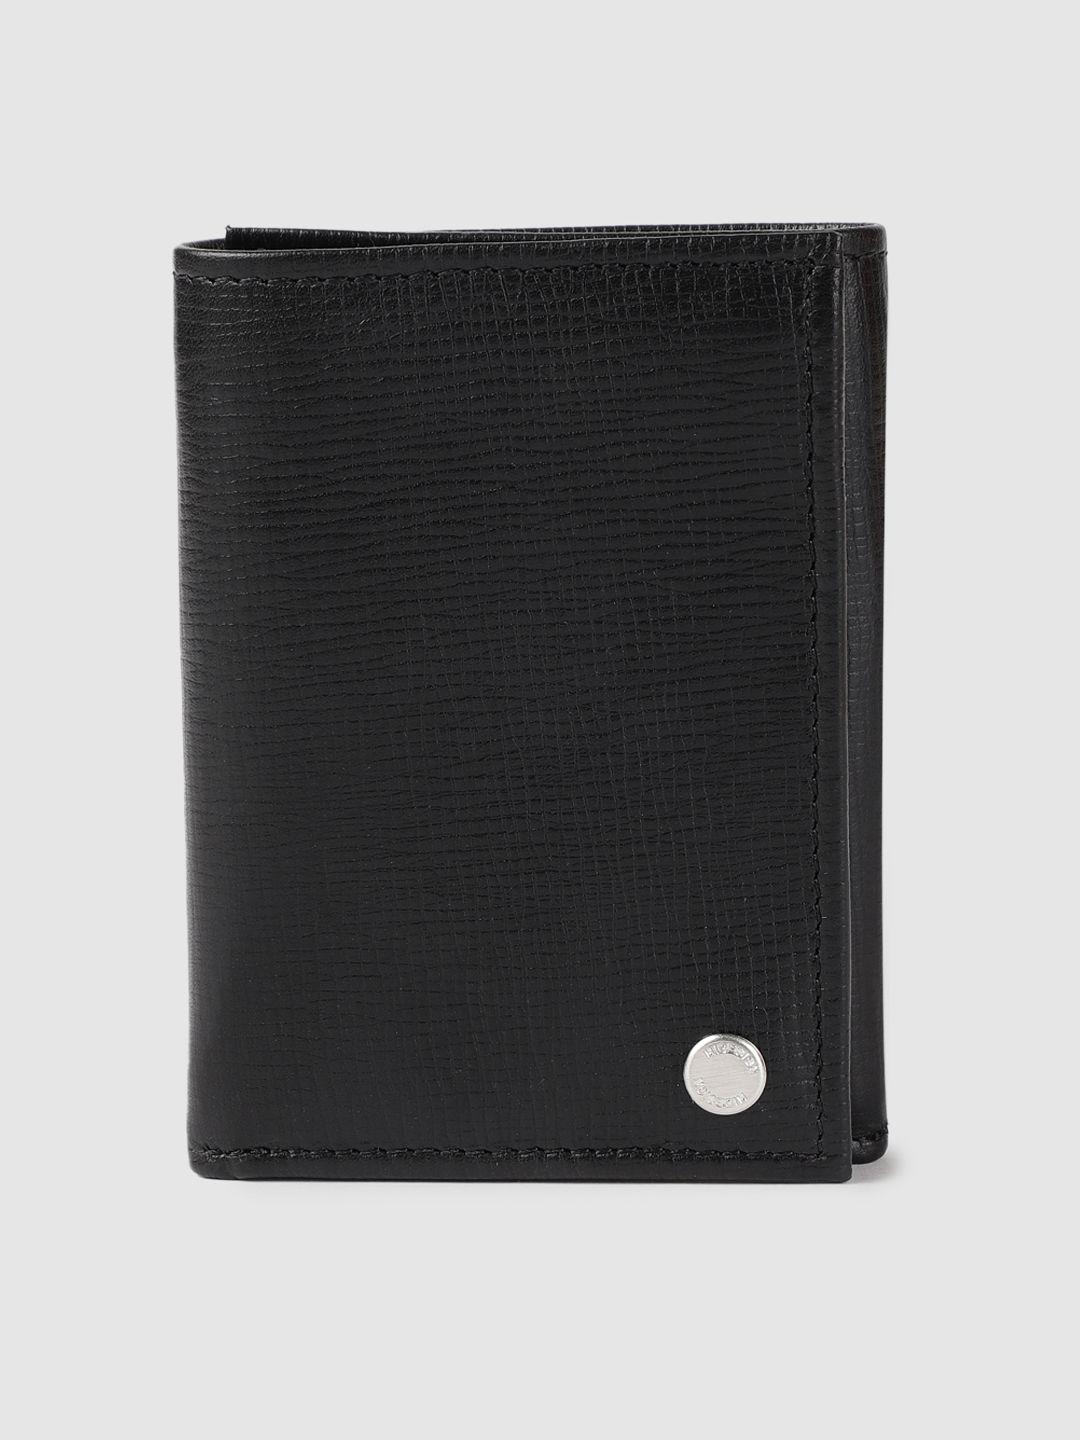 hidesign men black textured three fold leather wallet